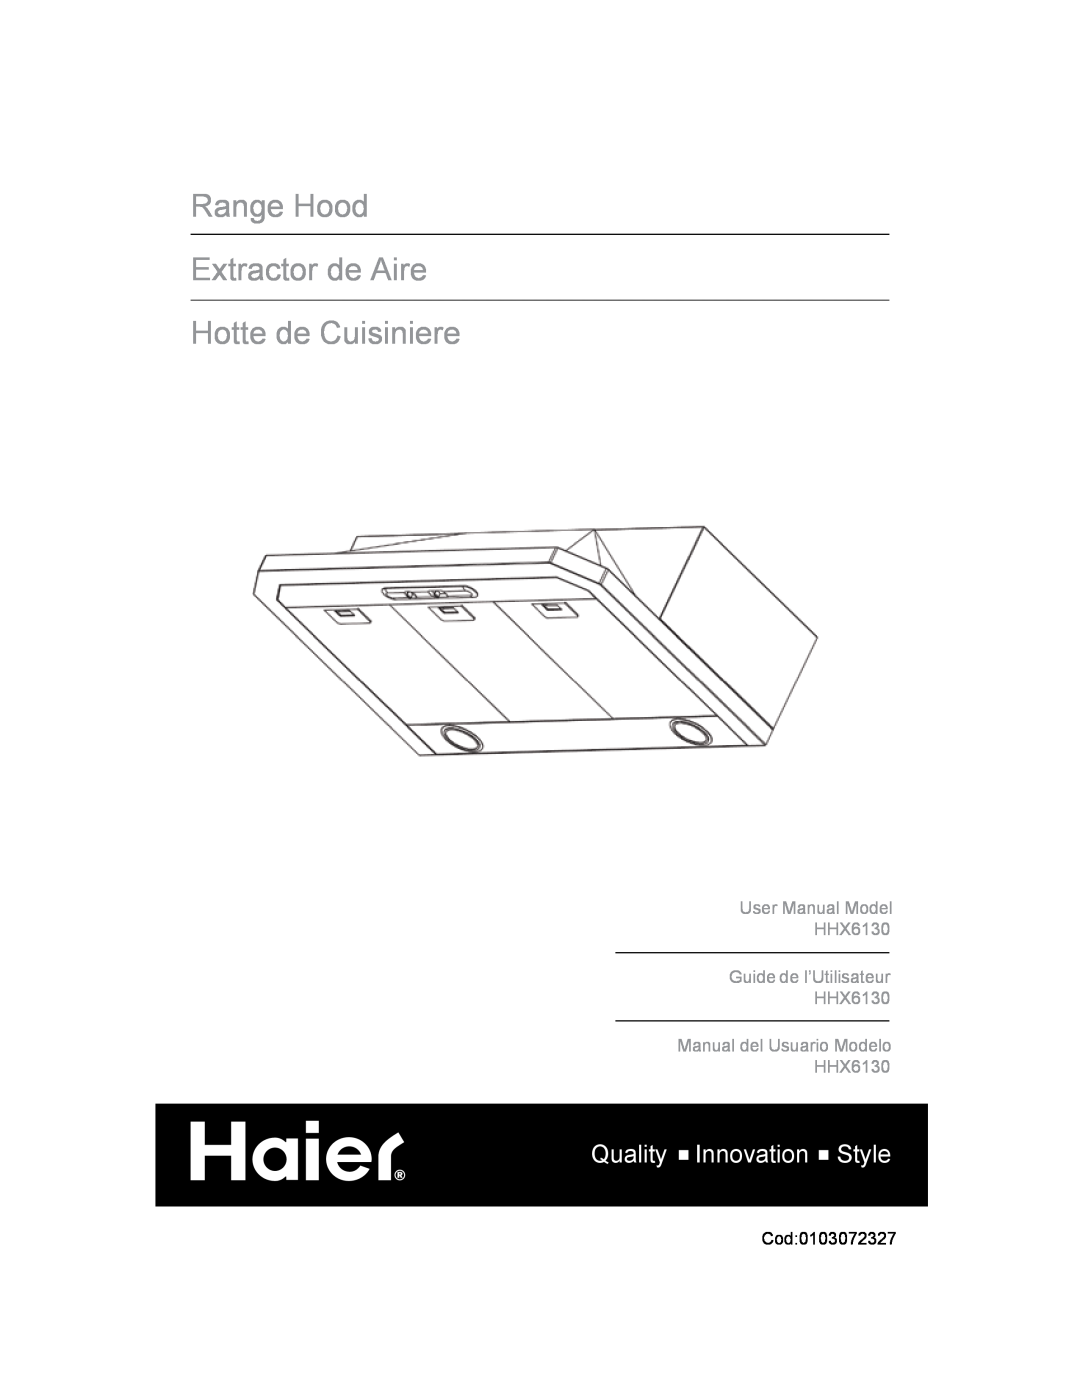 Haier HHX6130 user manual Range Hood Extractor de Aire Hotte de Cuisiniere, Quality Innovation Style 